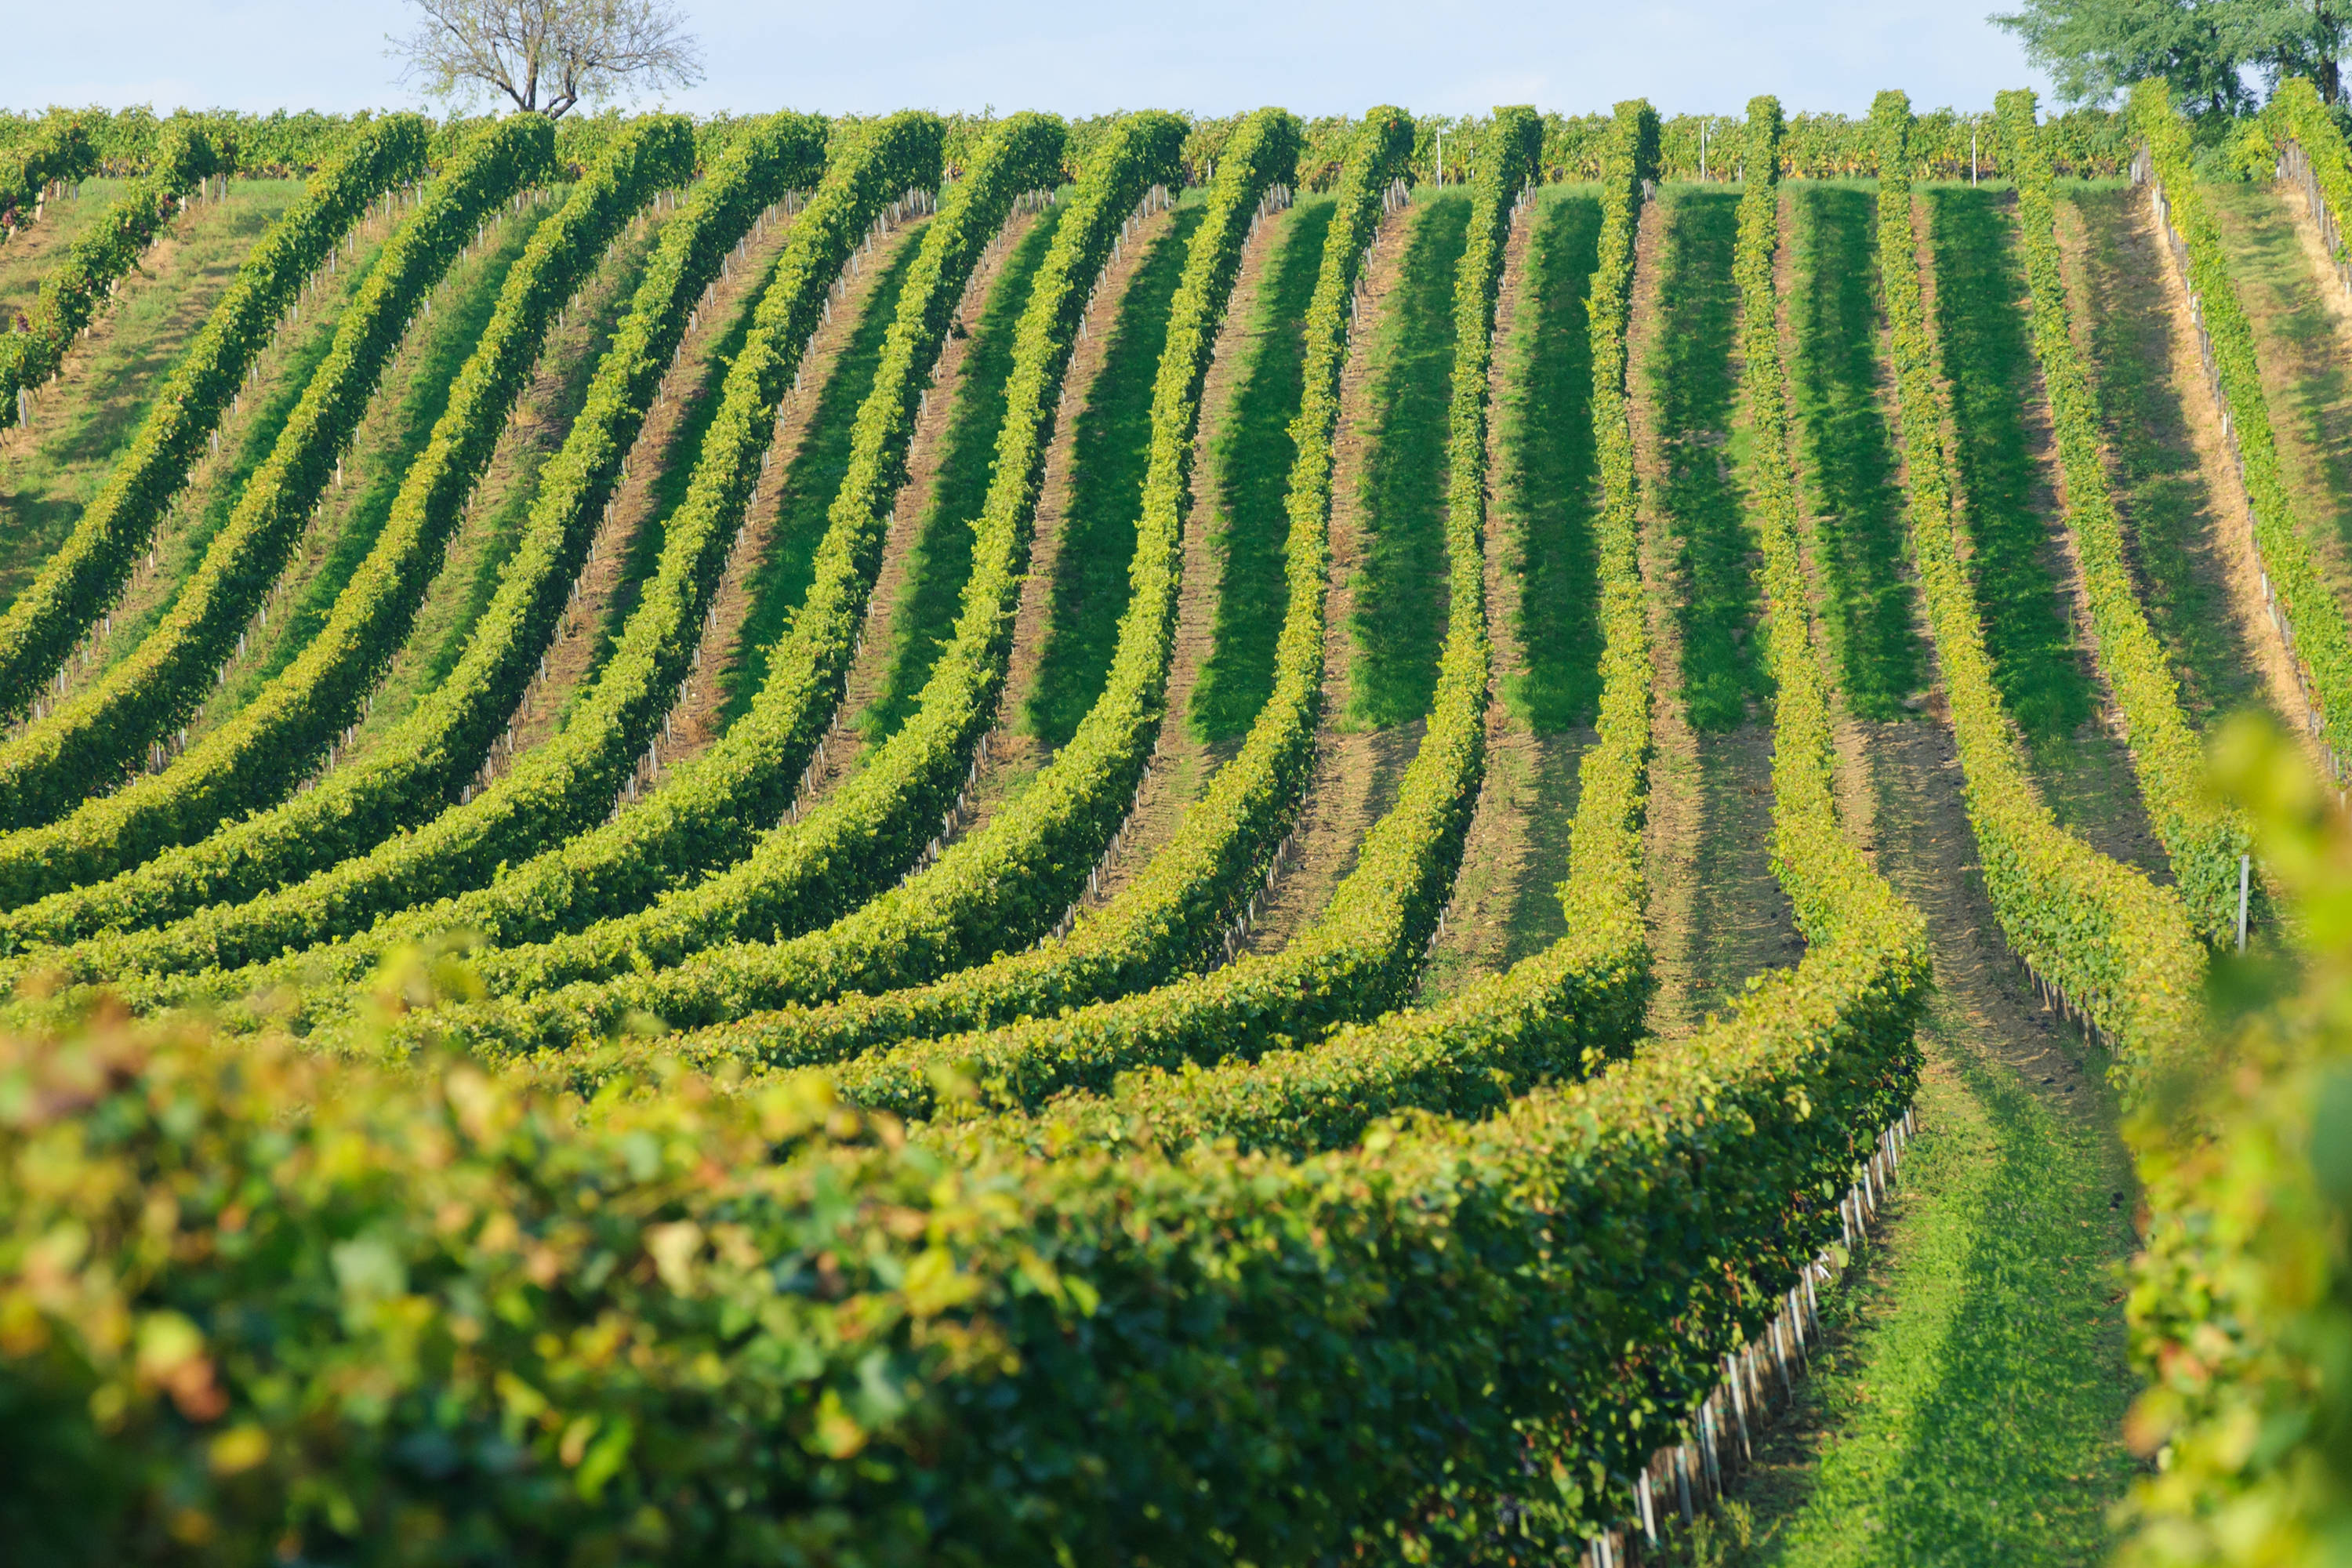 Rows of vines at a vineyard.